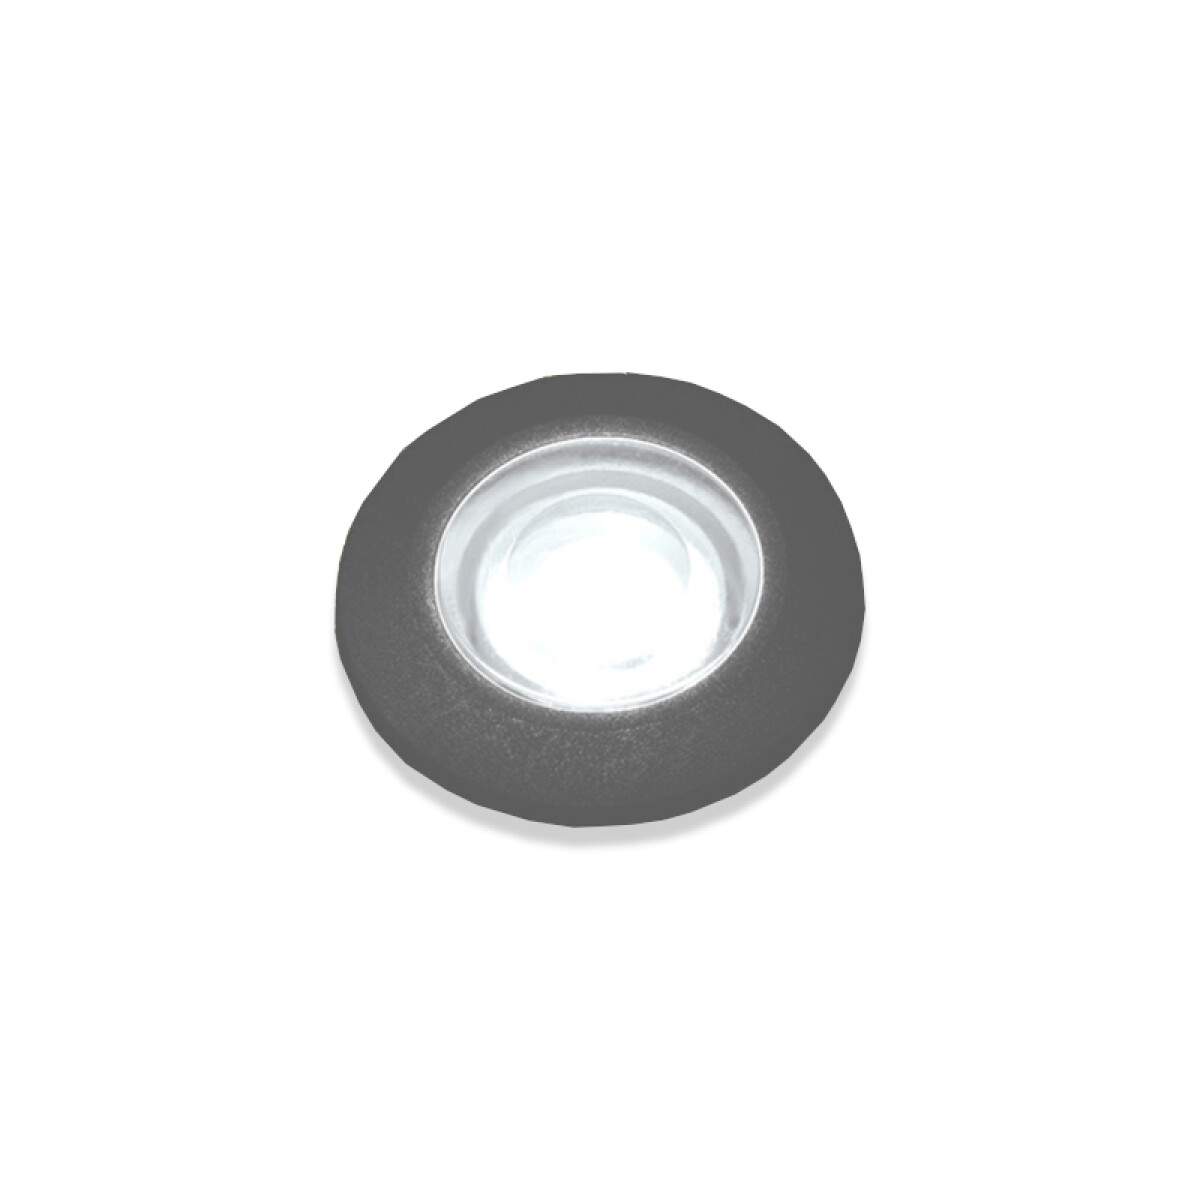 Luminaria de embutir LED piso gris IP67 Ø50mm - FL0942 